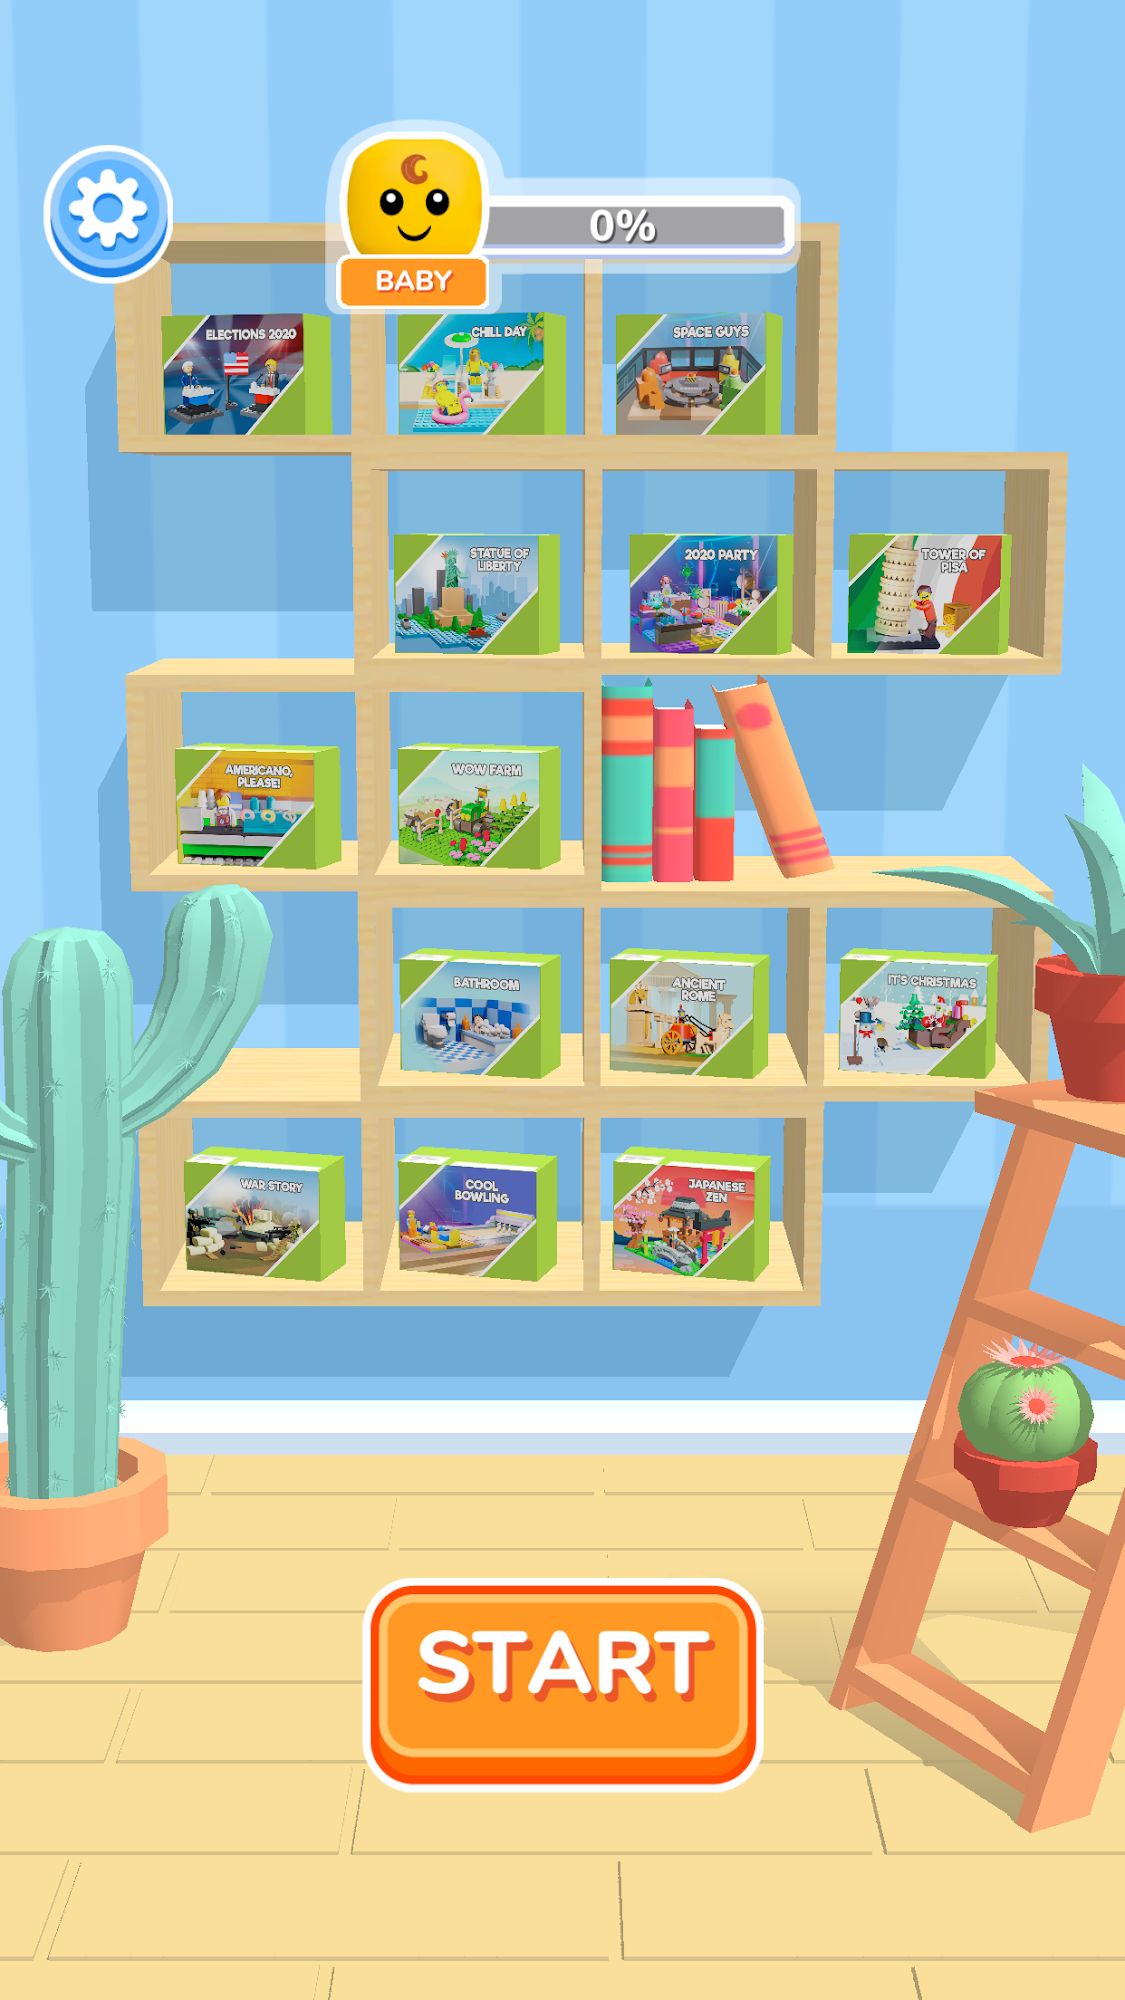 Construction Set - Android game screenshots.